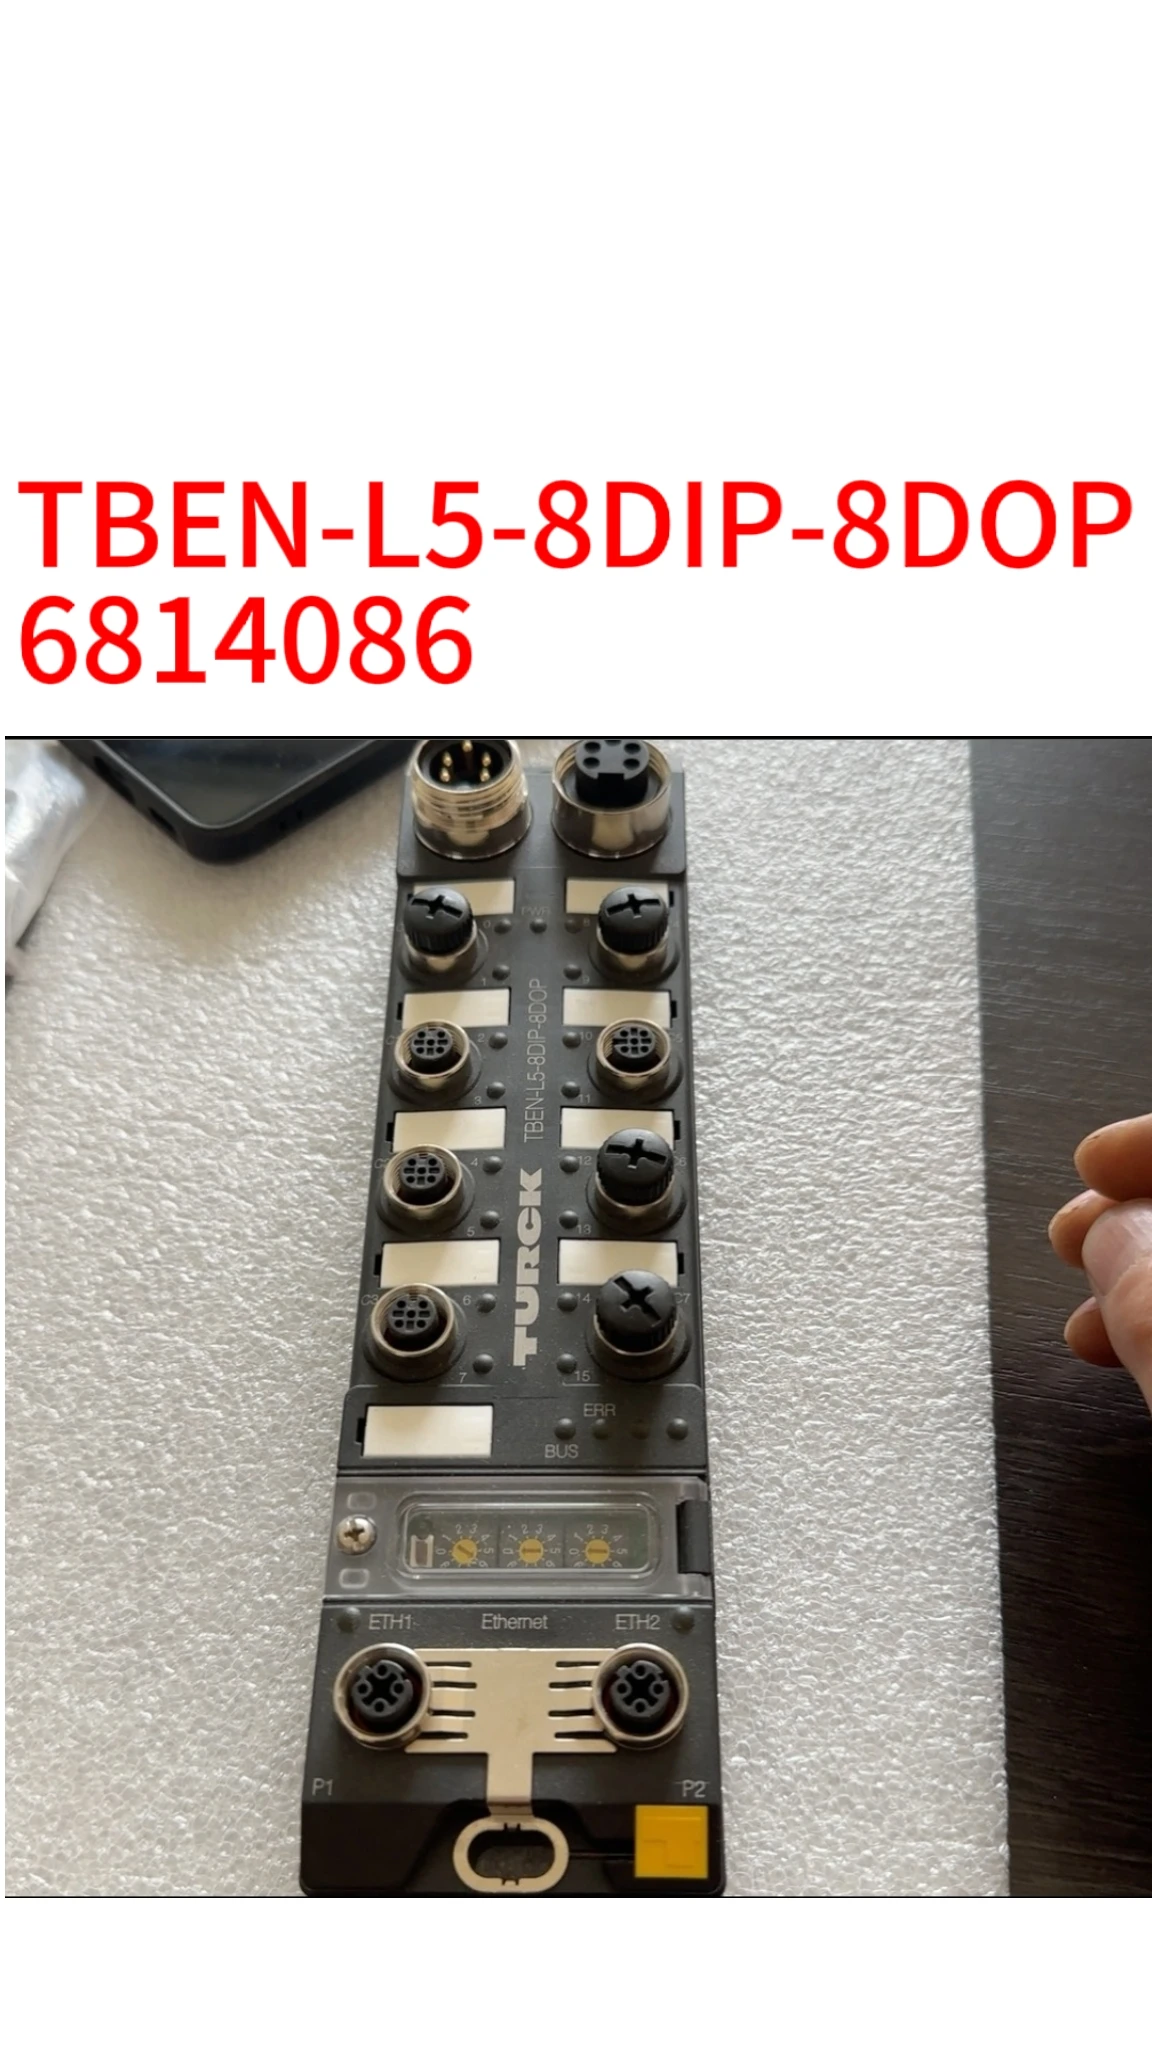 

brand new TBEN-L5-8DIP-8DOP 6814086